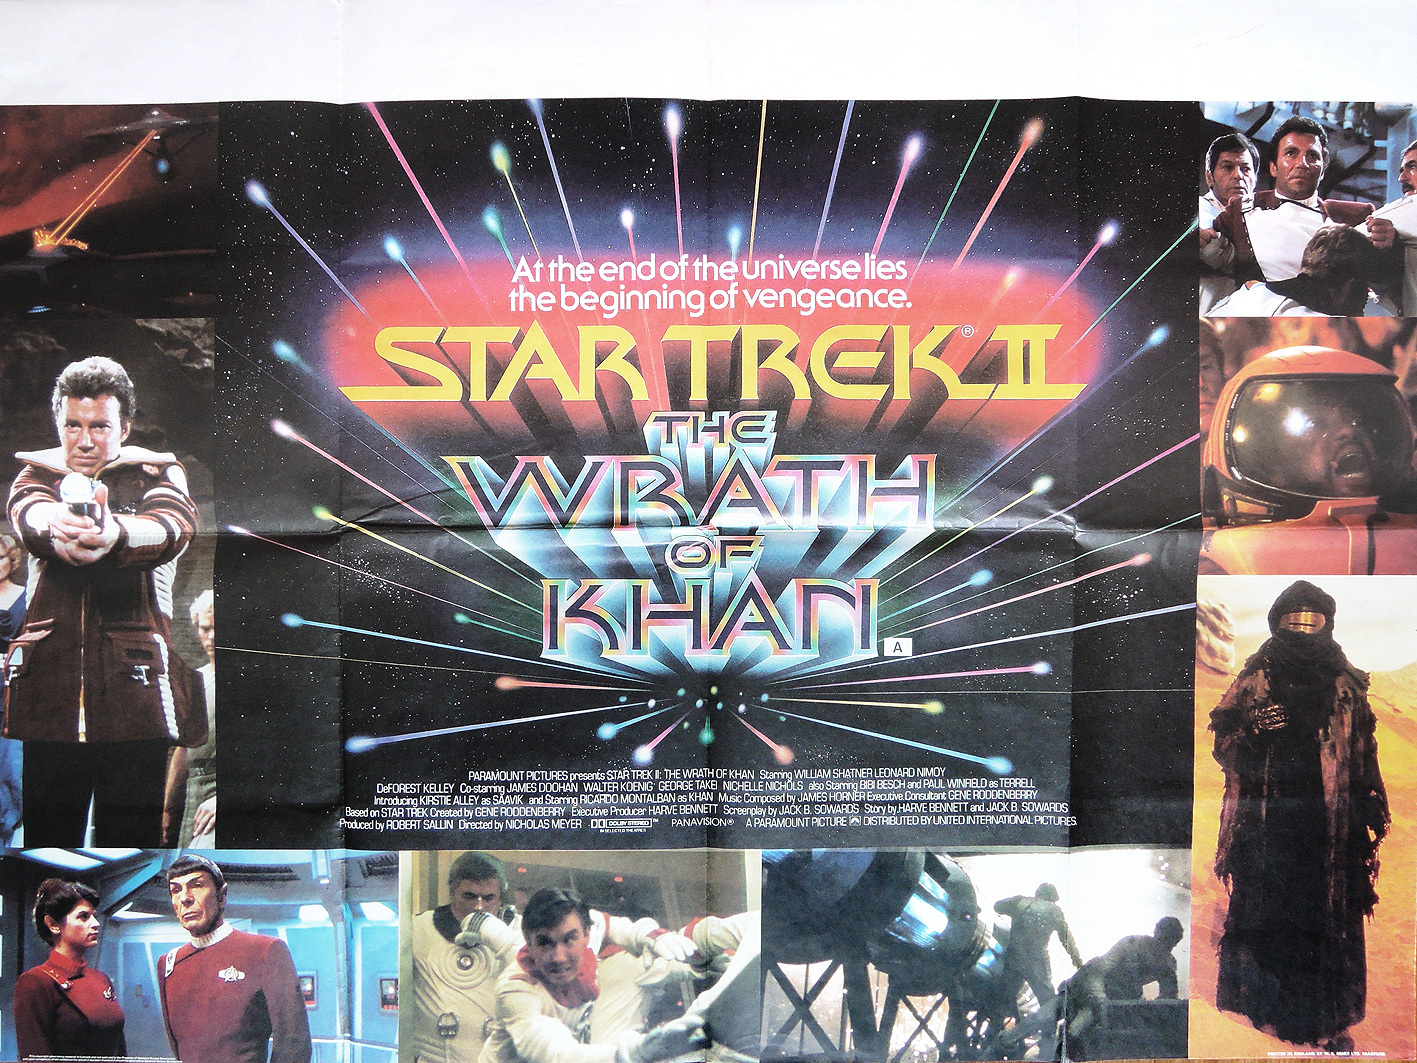 Star Trek 2 - The Wrath of Khan movie quad poster